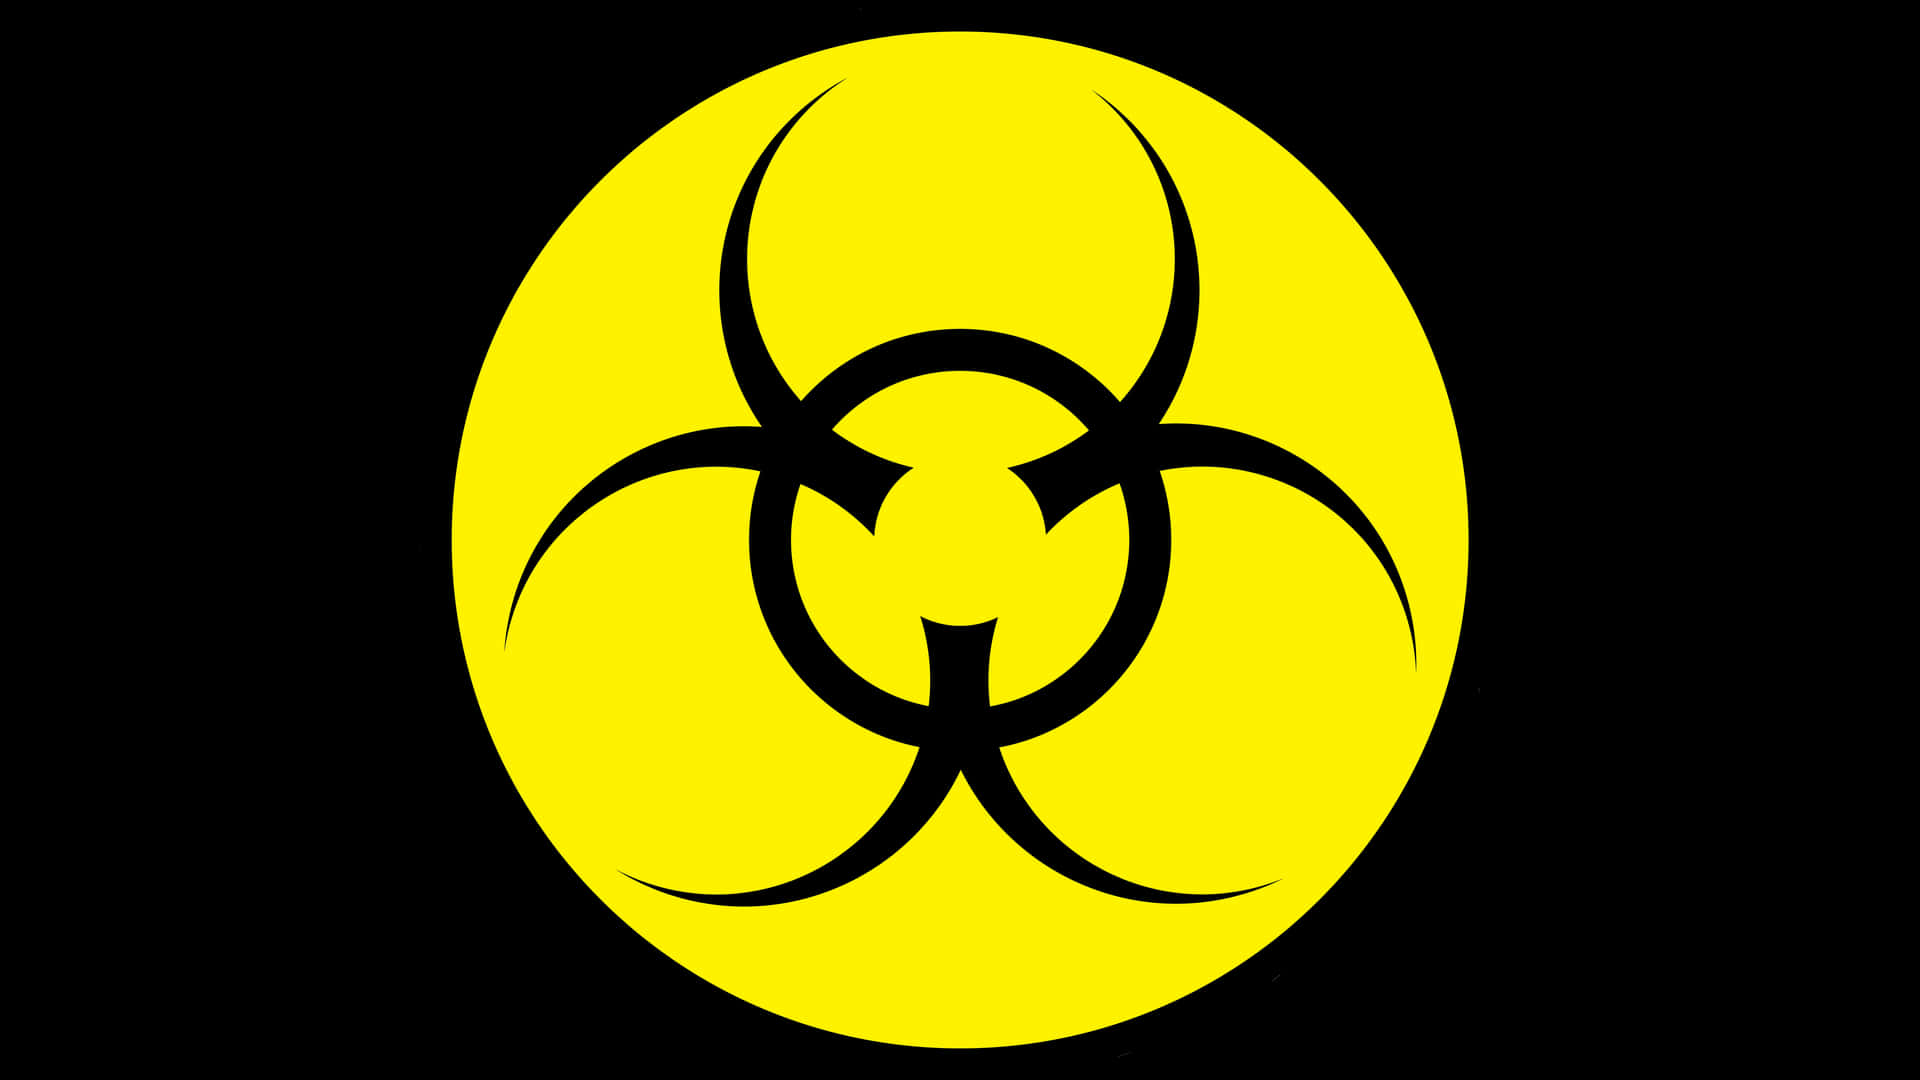 Rundesgiftiges Biohazard-symbol Wallpaper